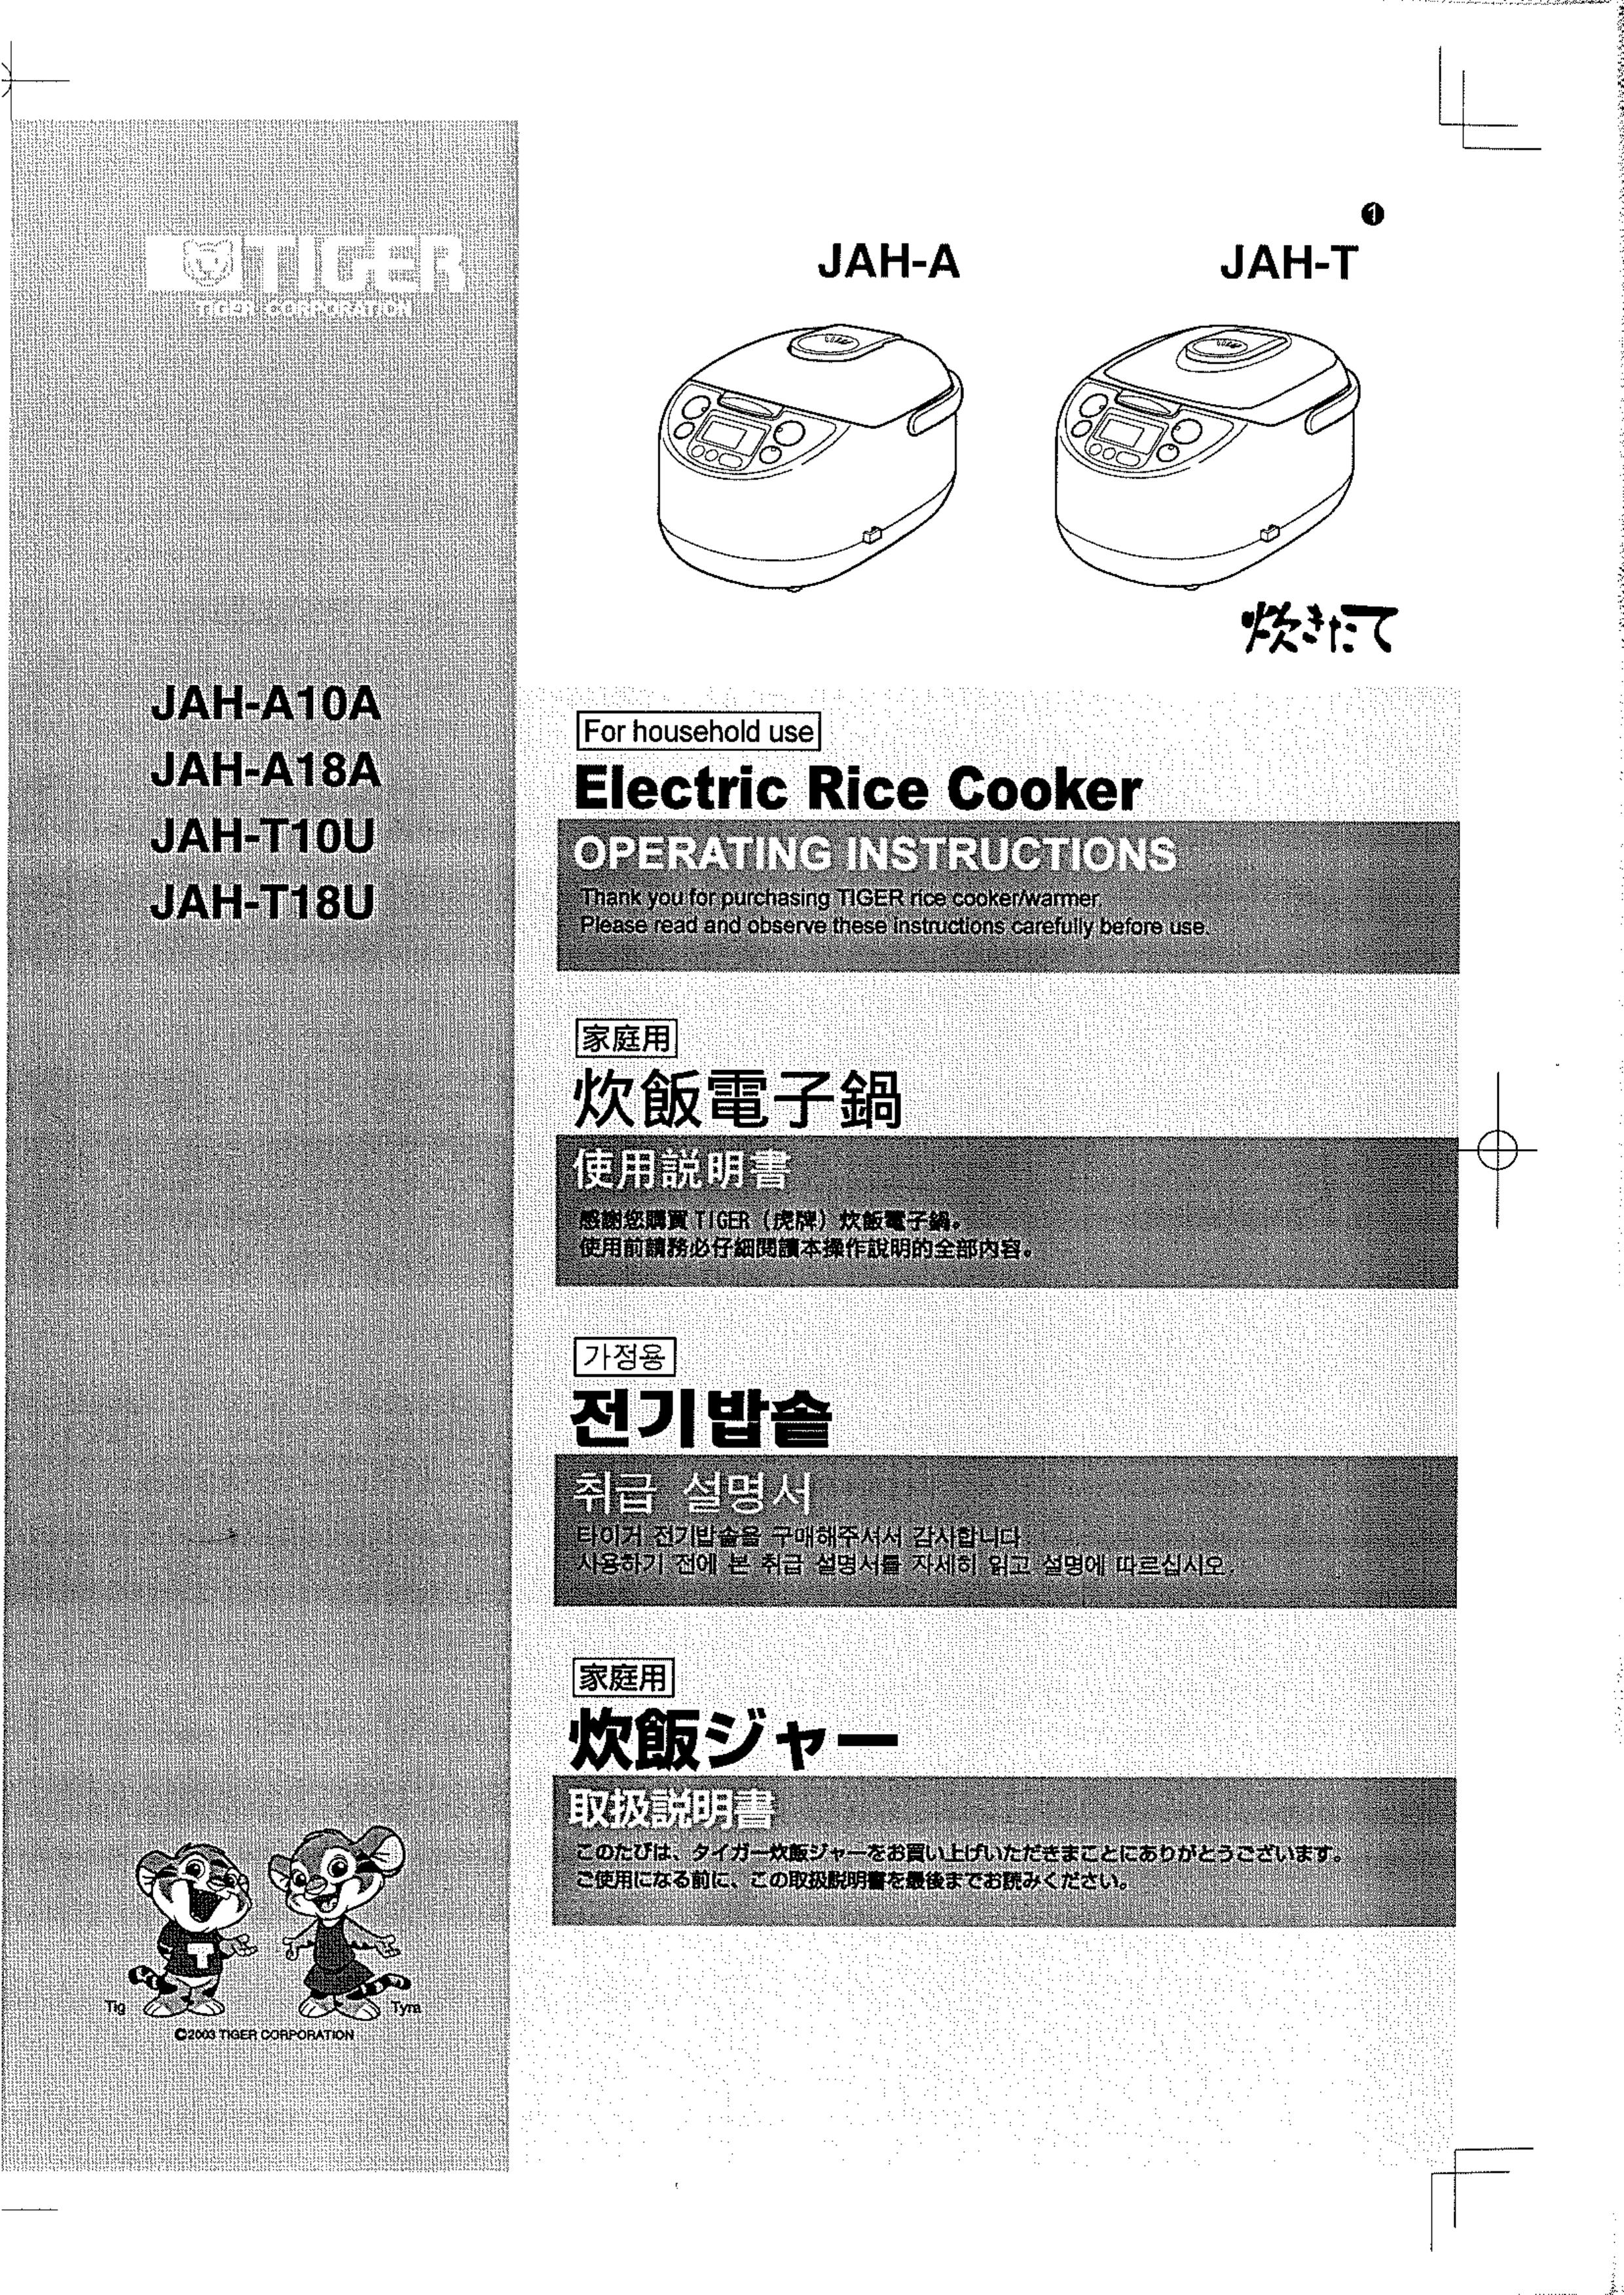 Tiger Products Co., Ltd JAH-T10U Rice Cooker User Manual